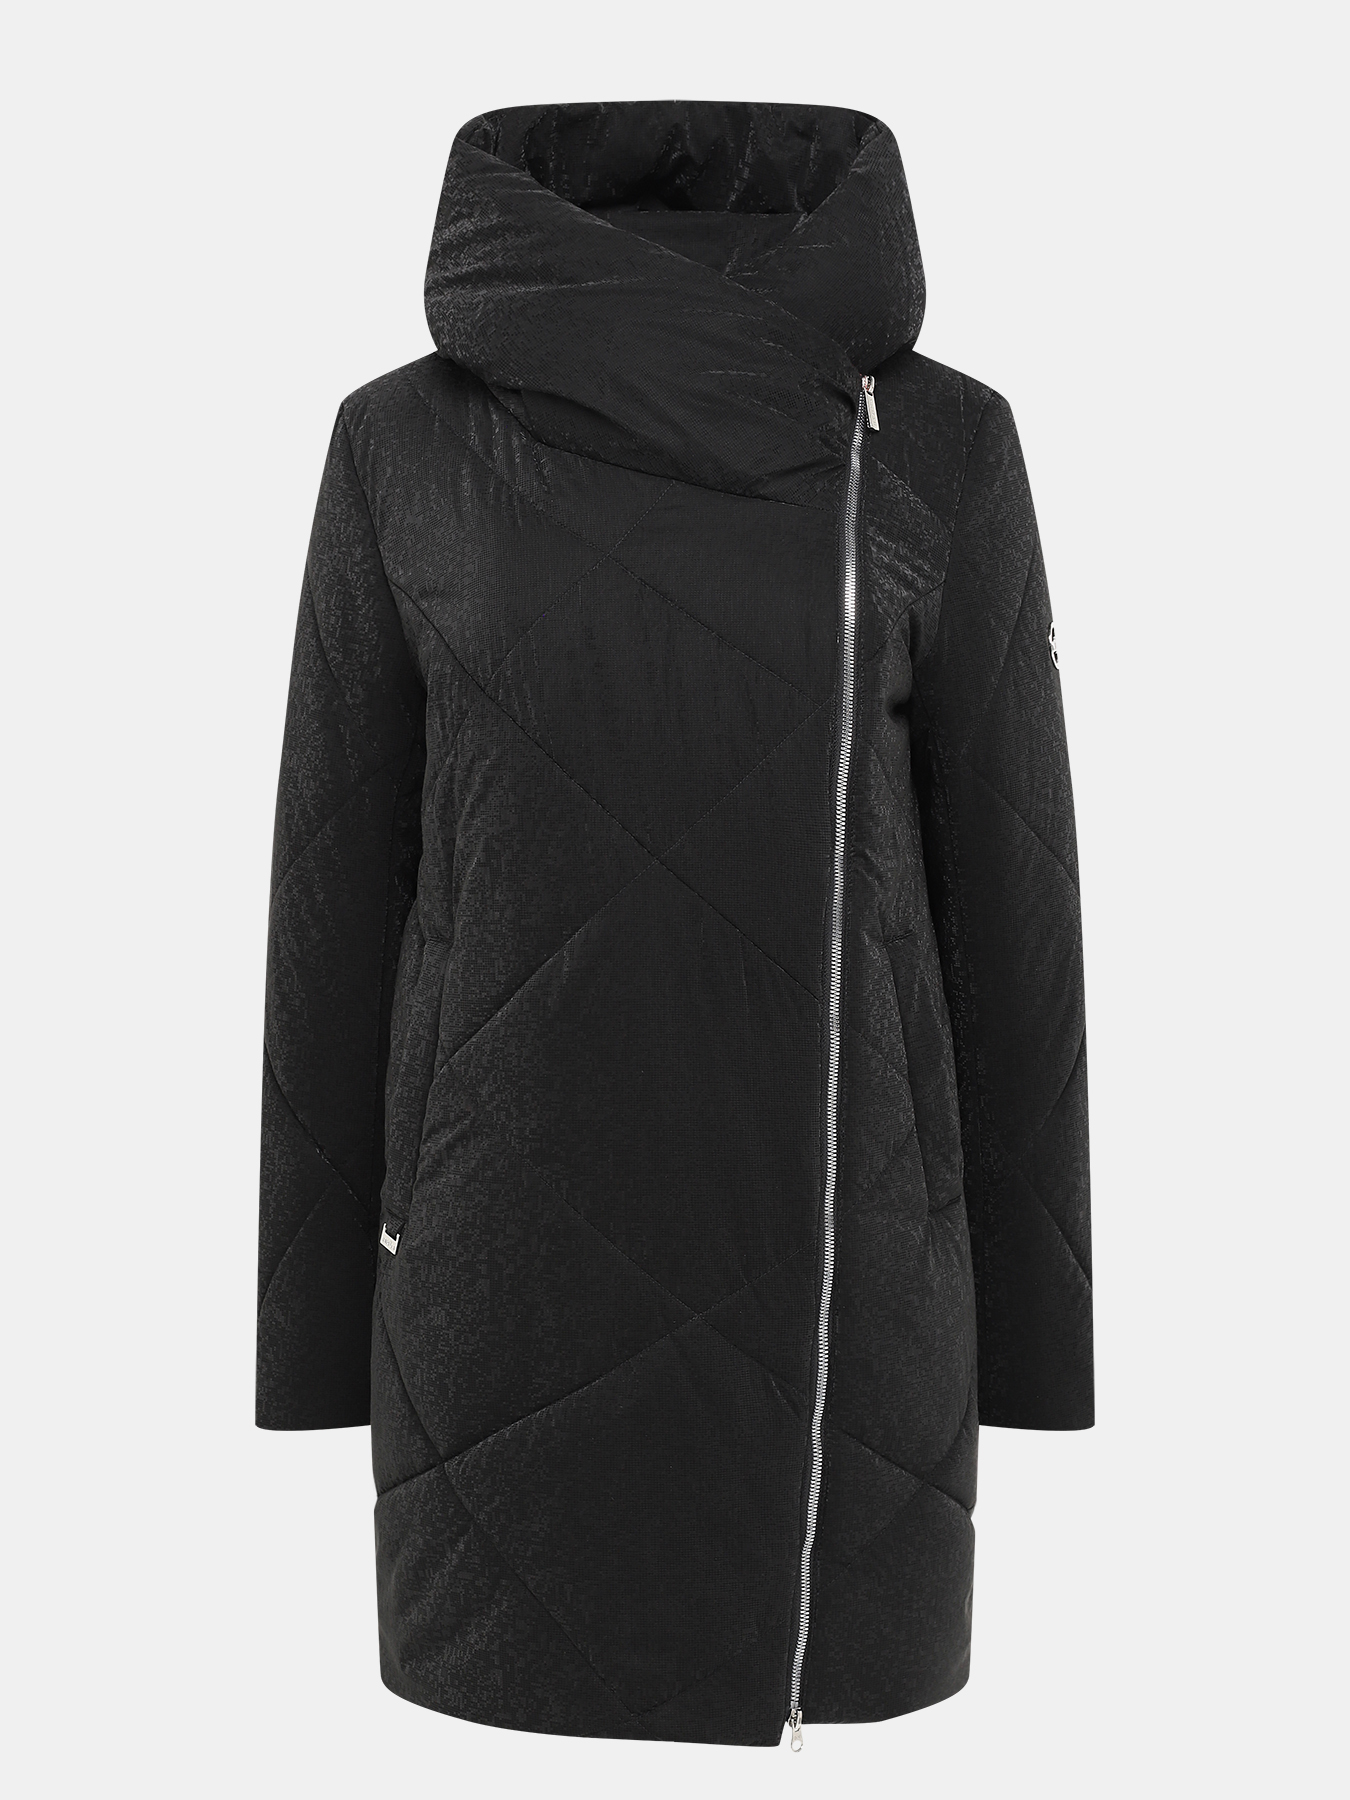 Пальто зимнее Maritta 433524-020, цвет черный, размер 44